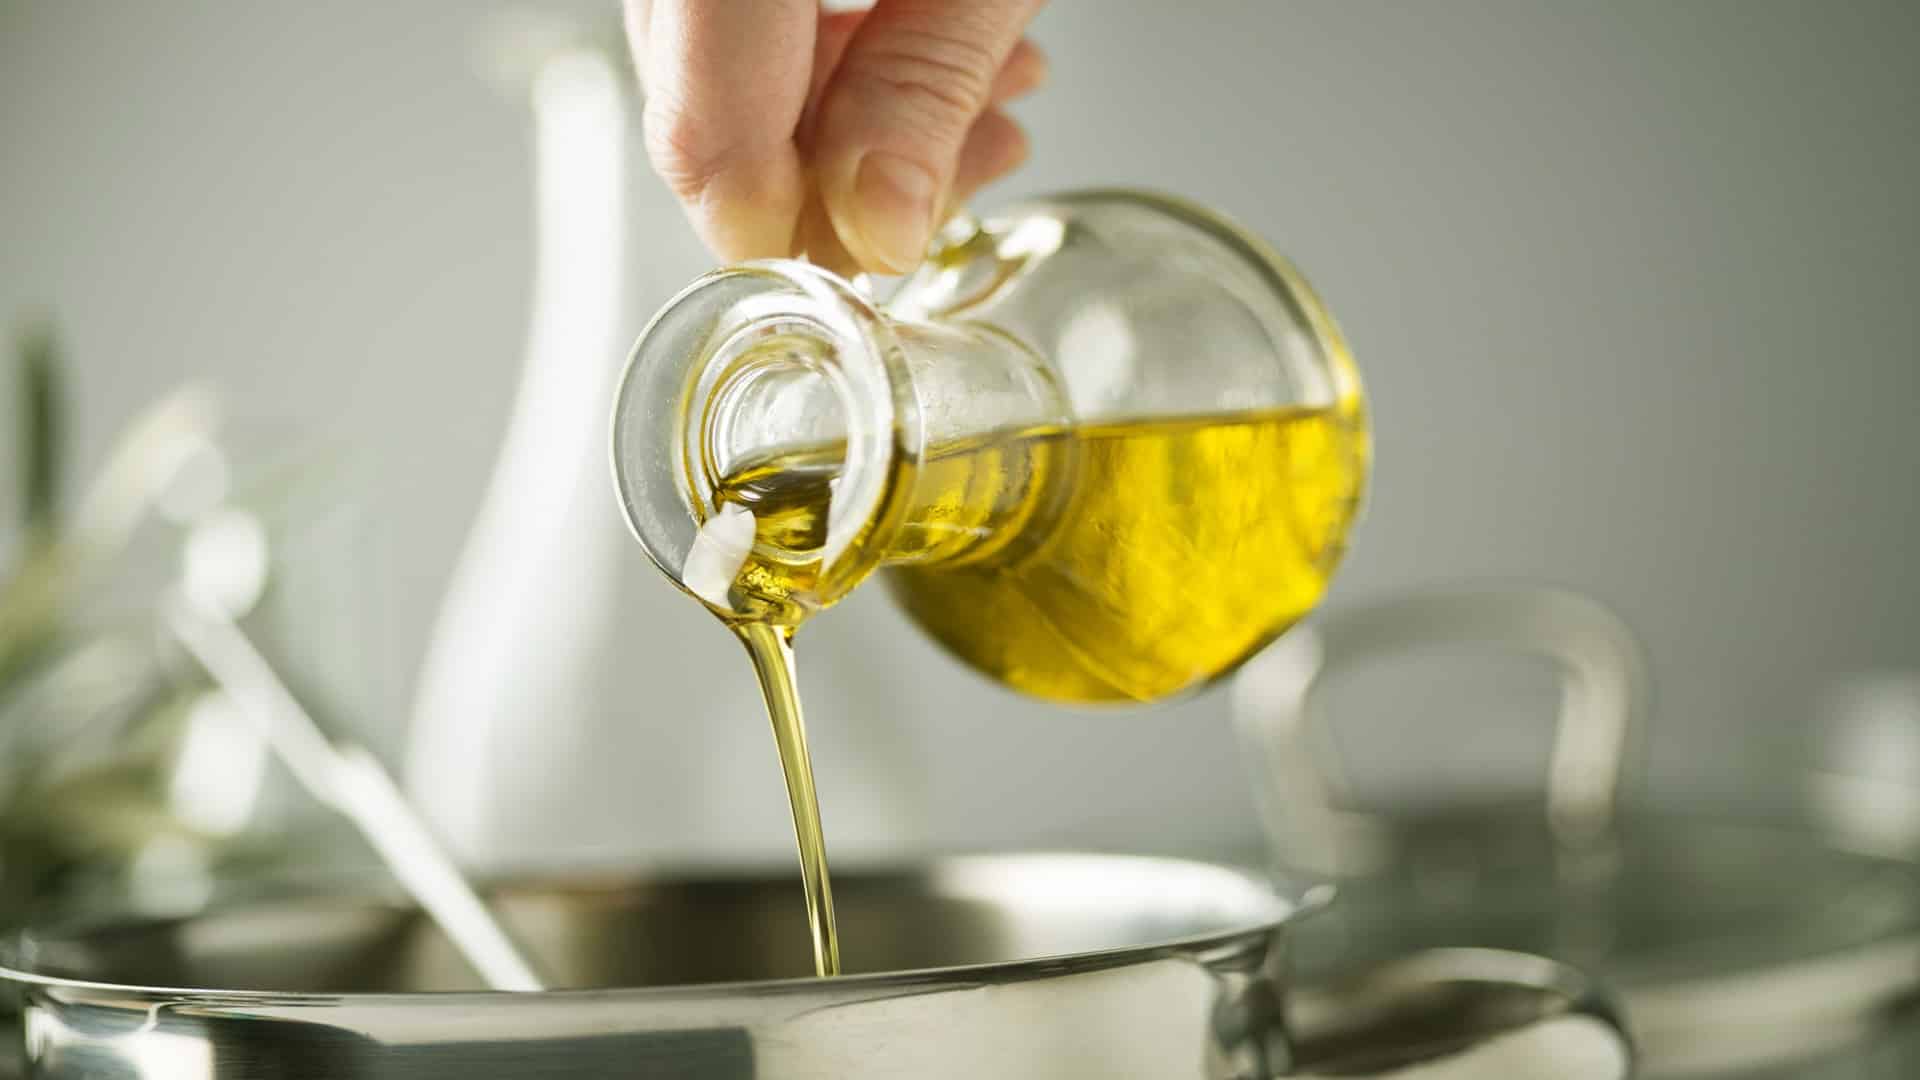 SEA asks edible oil players to reduce minimum retail price